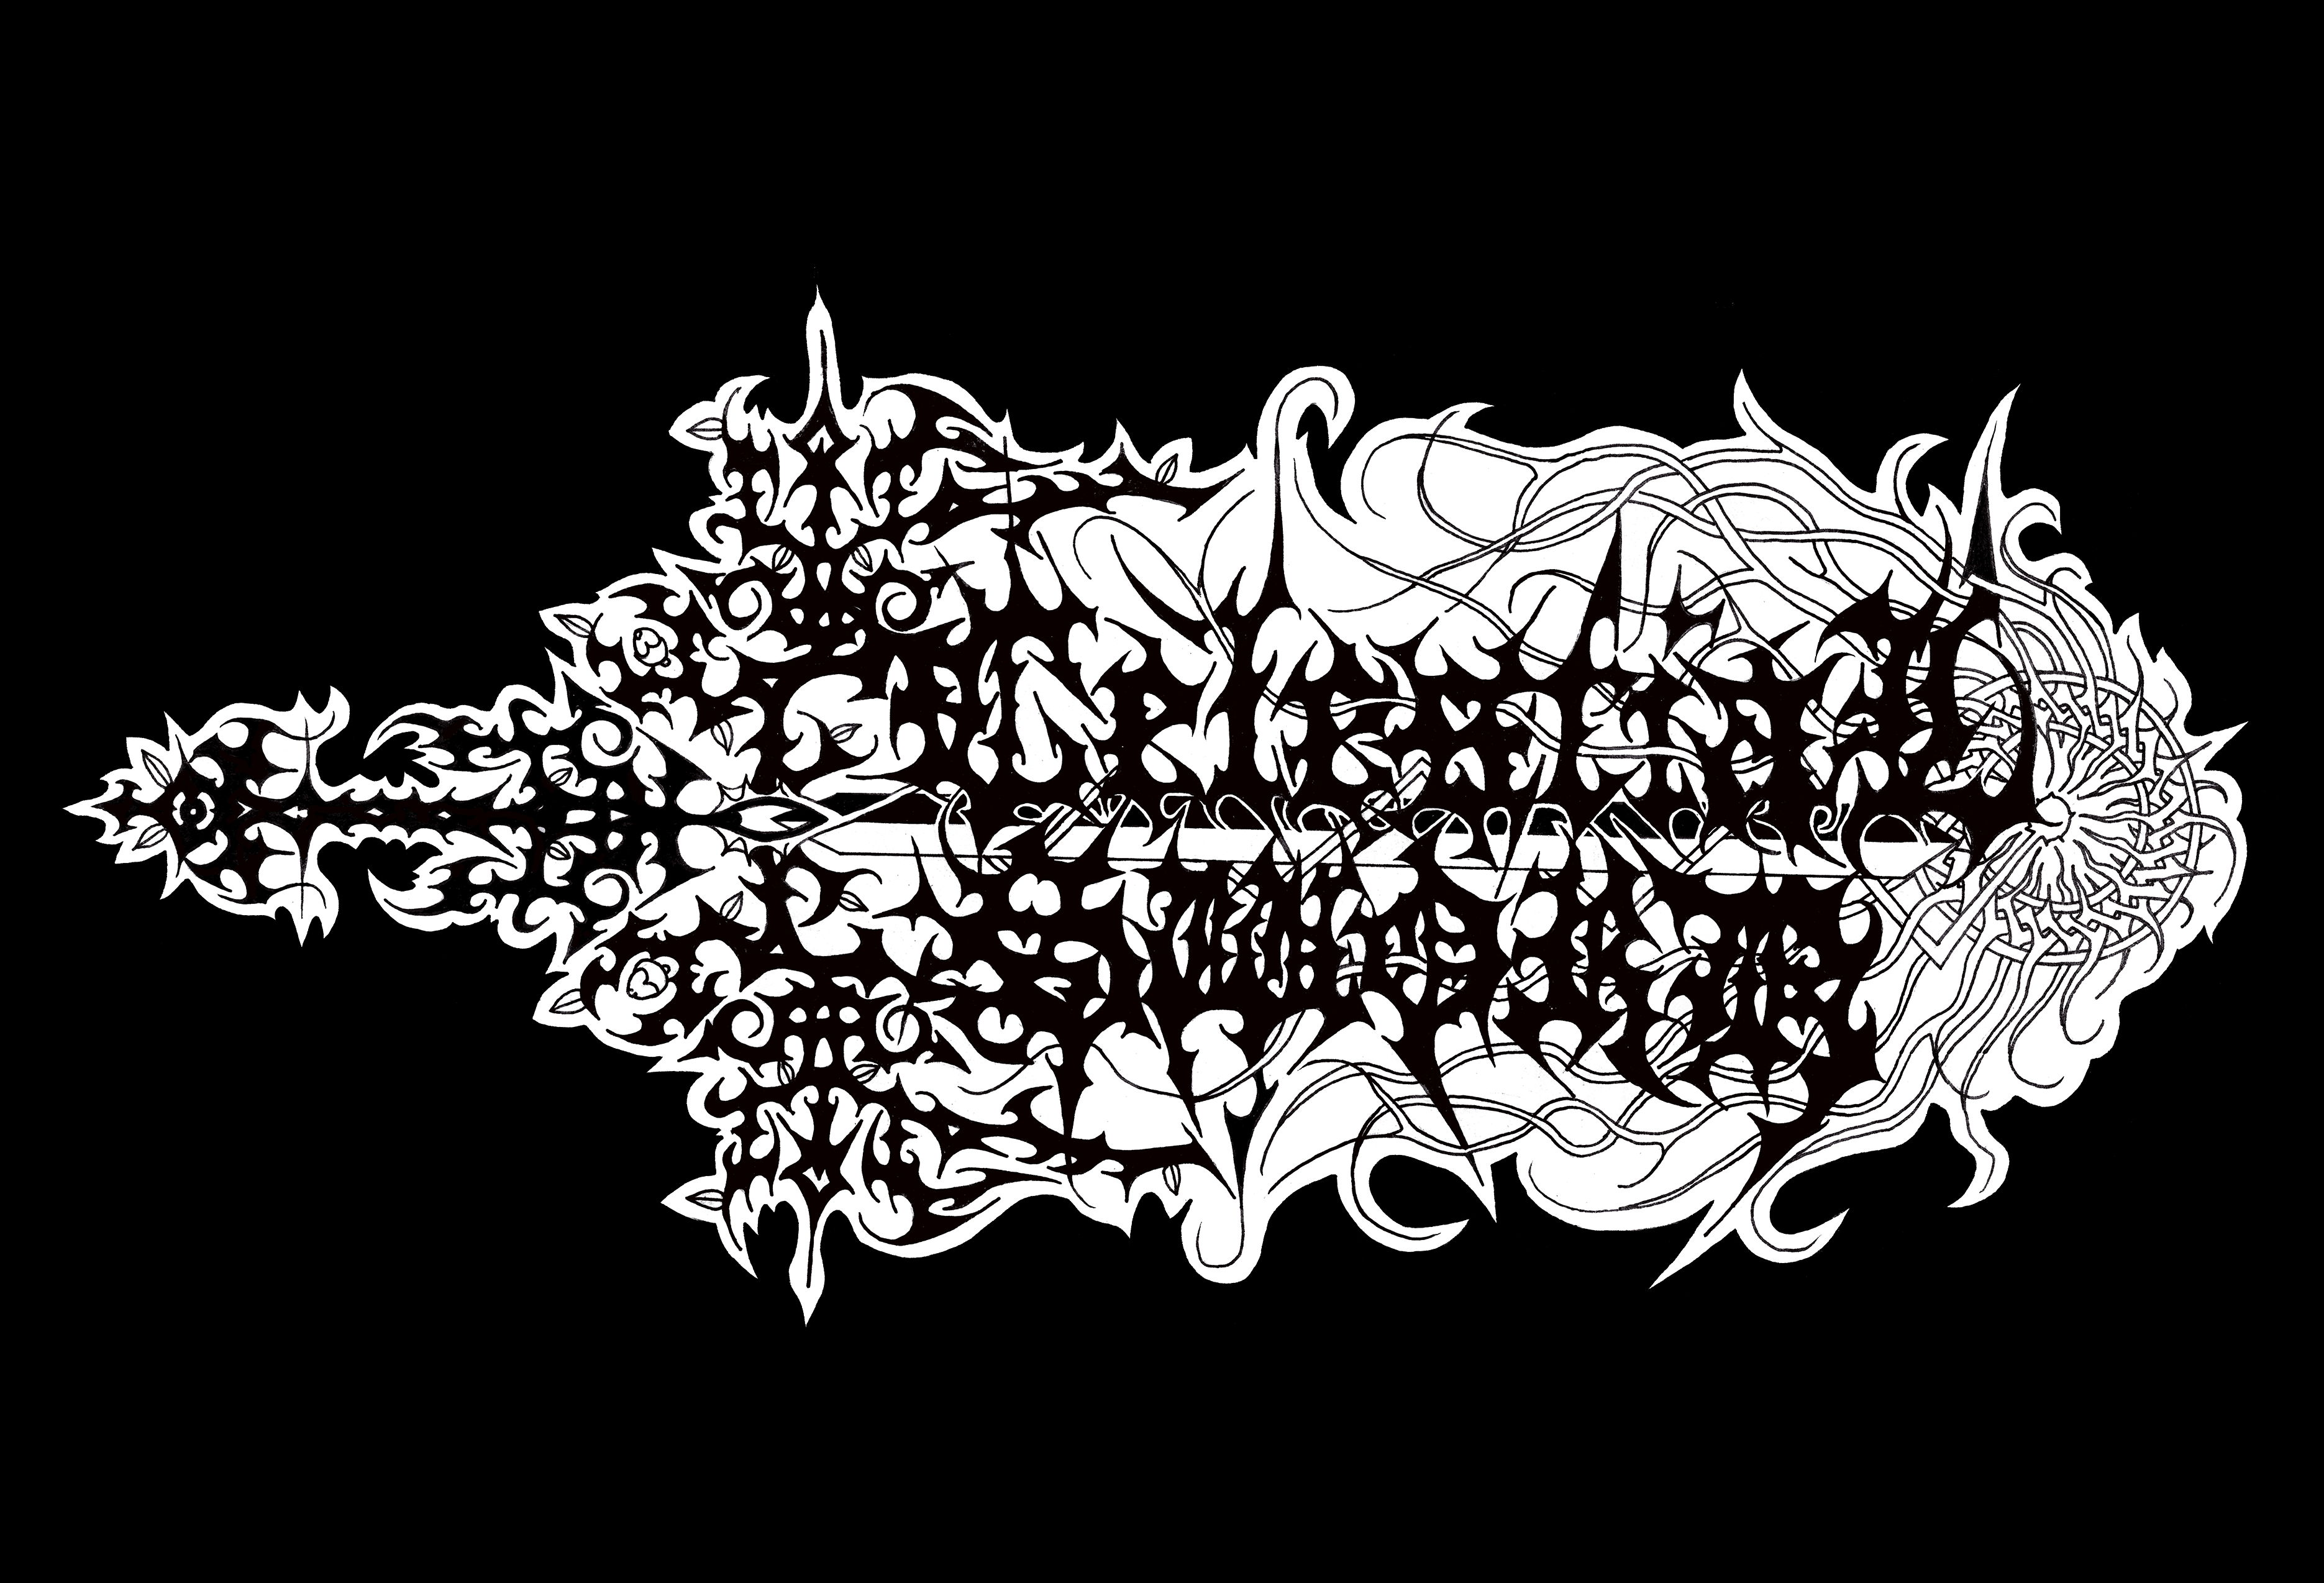 Celestial Sword logo by Amalantrah Workings